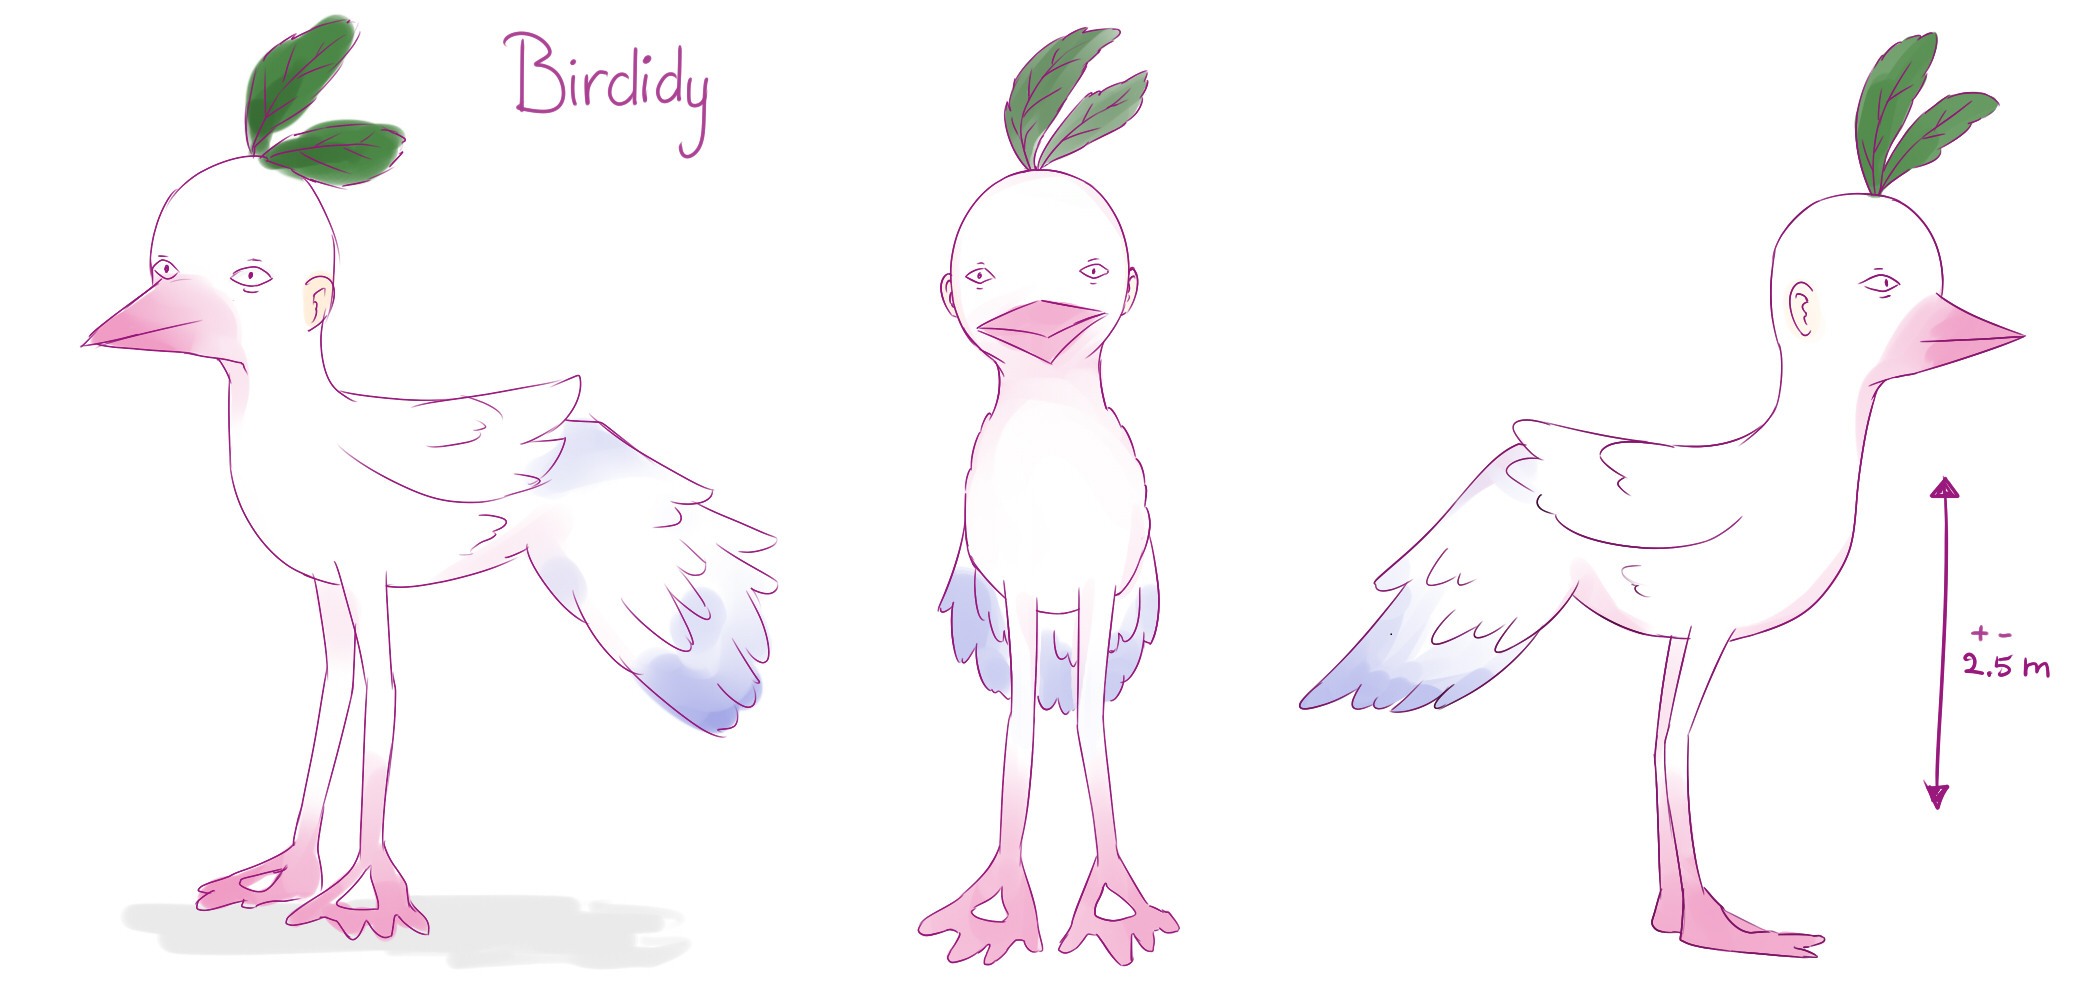 Vogeldinges character design_1